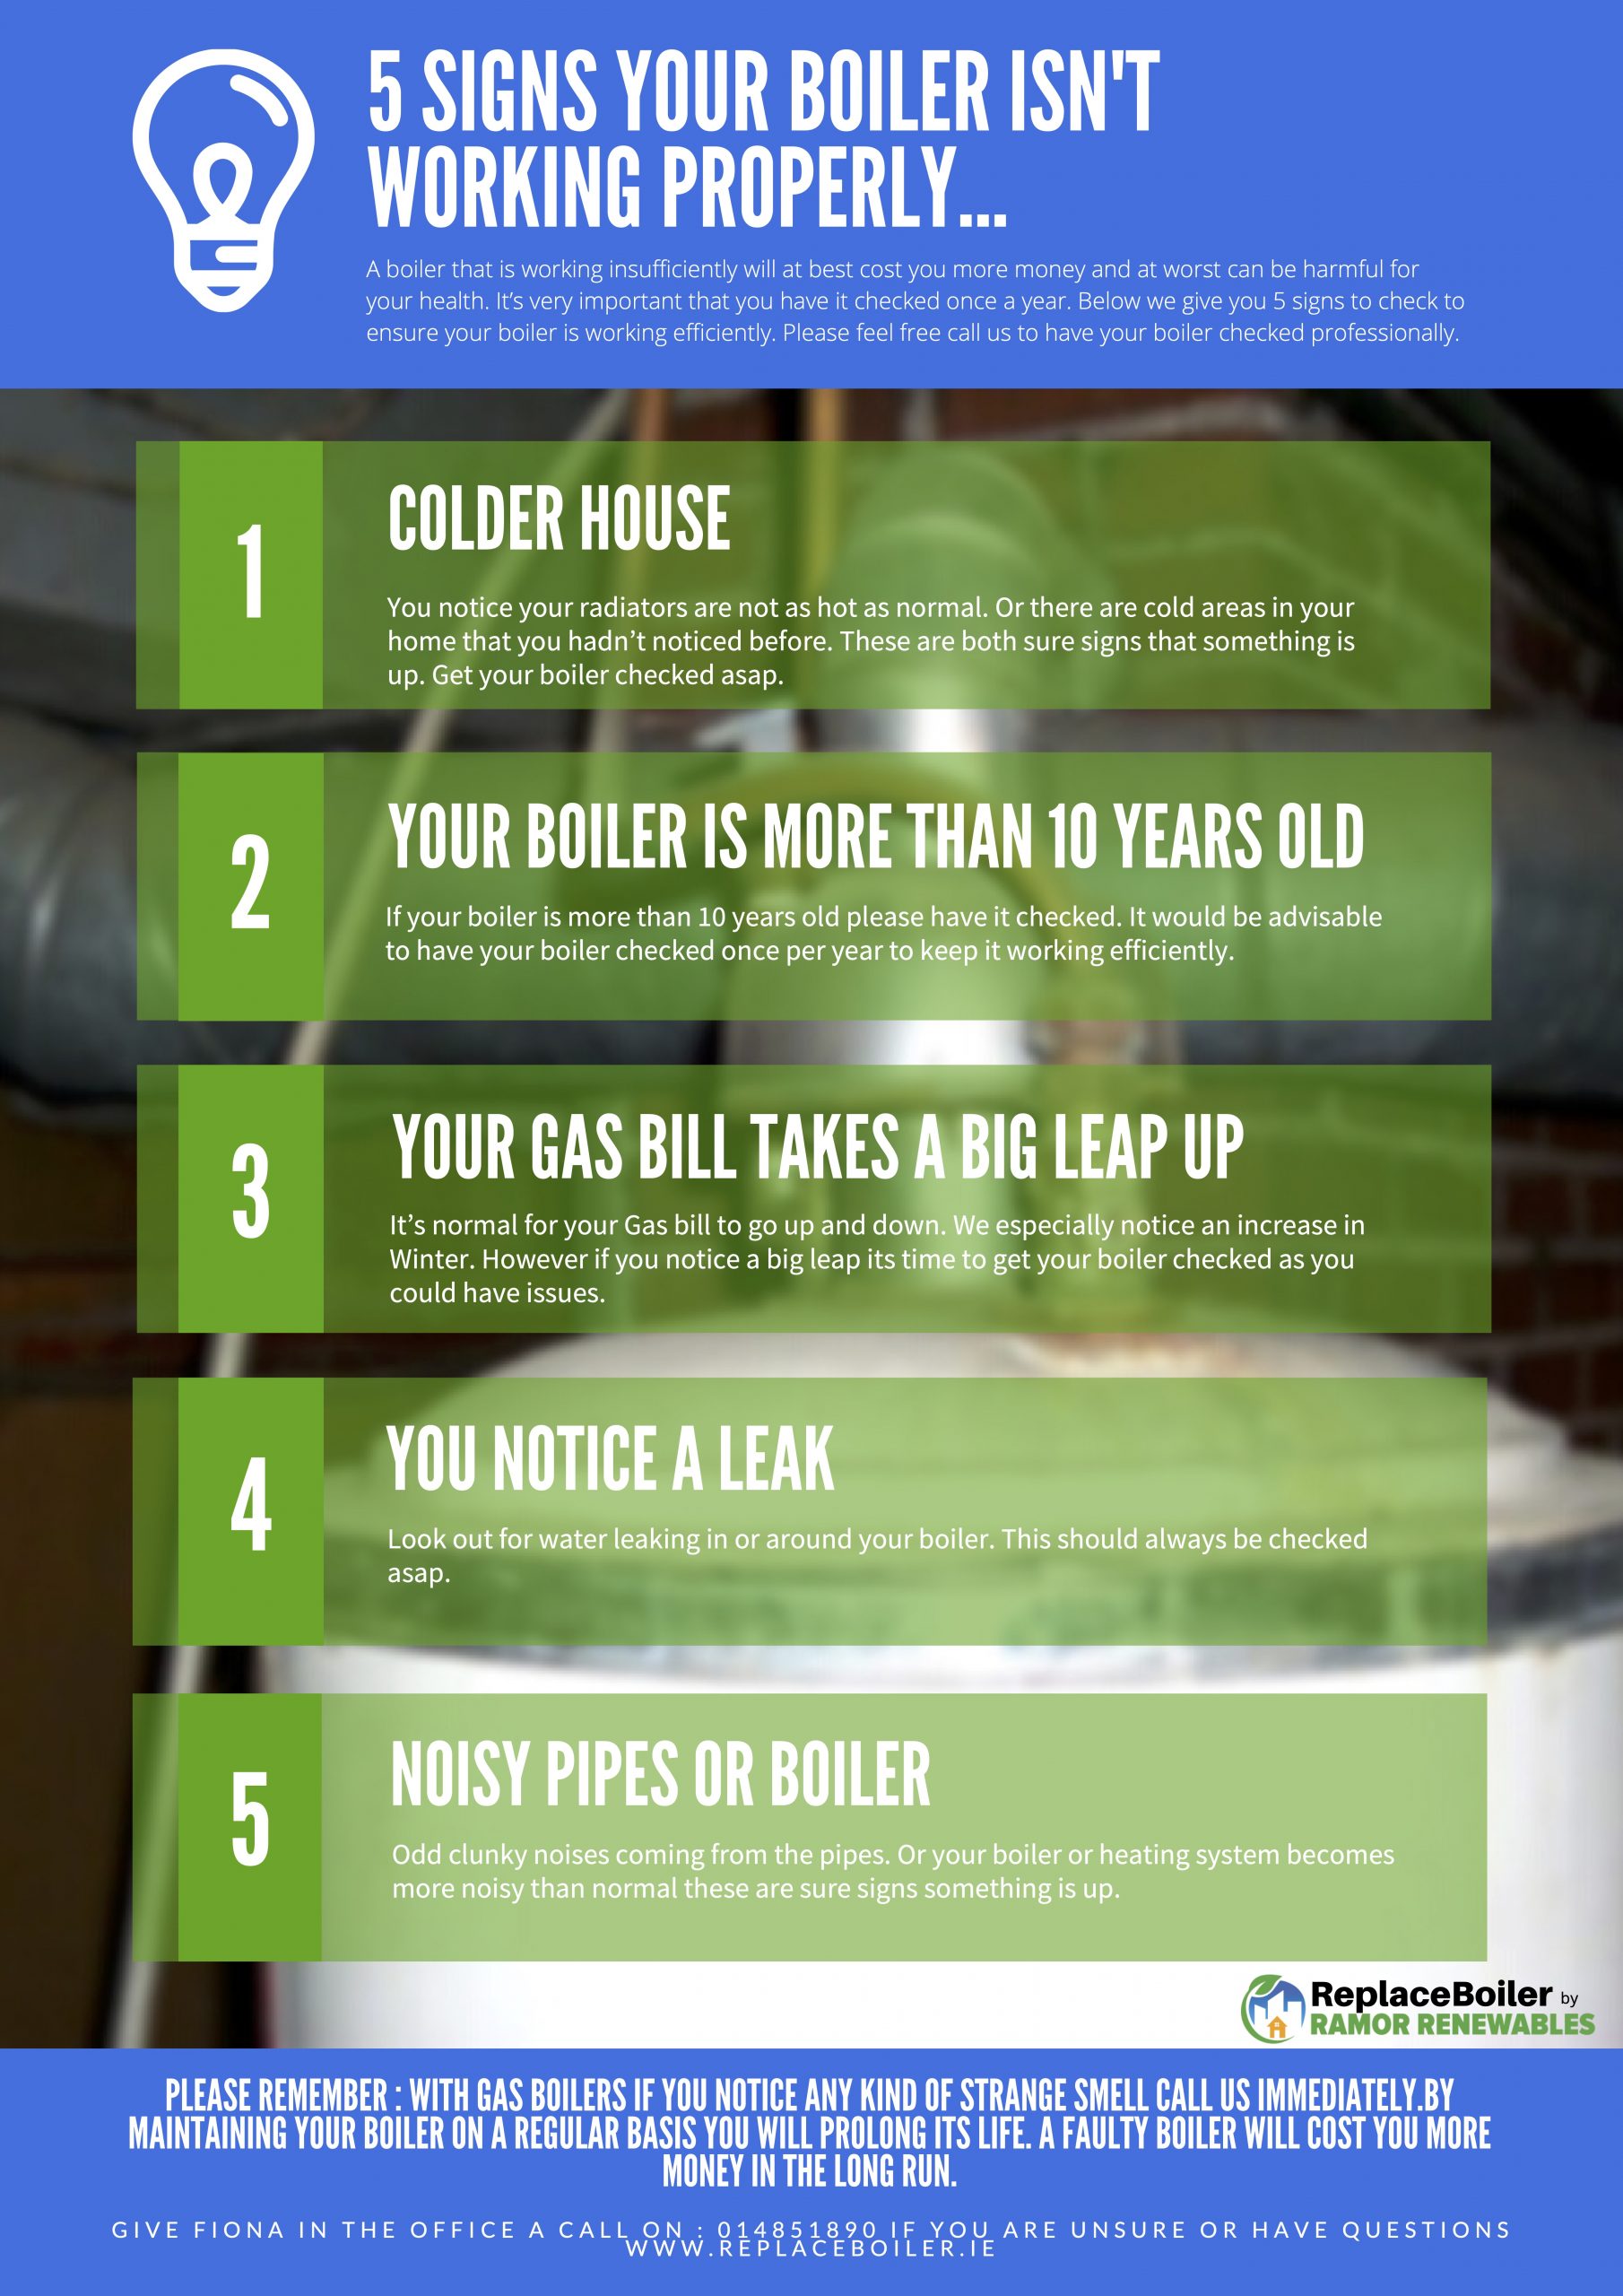 replace boiler 5 tips